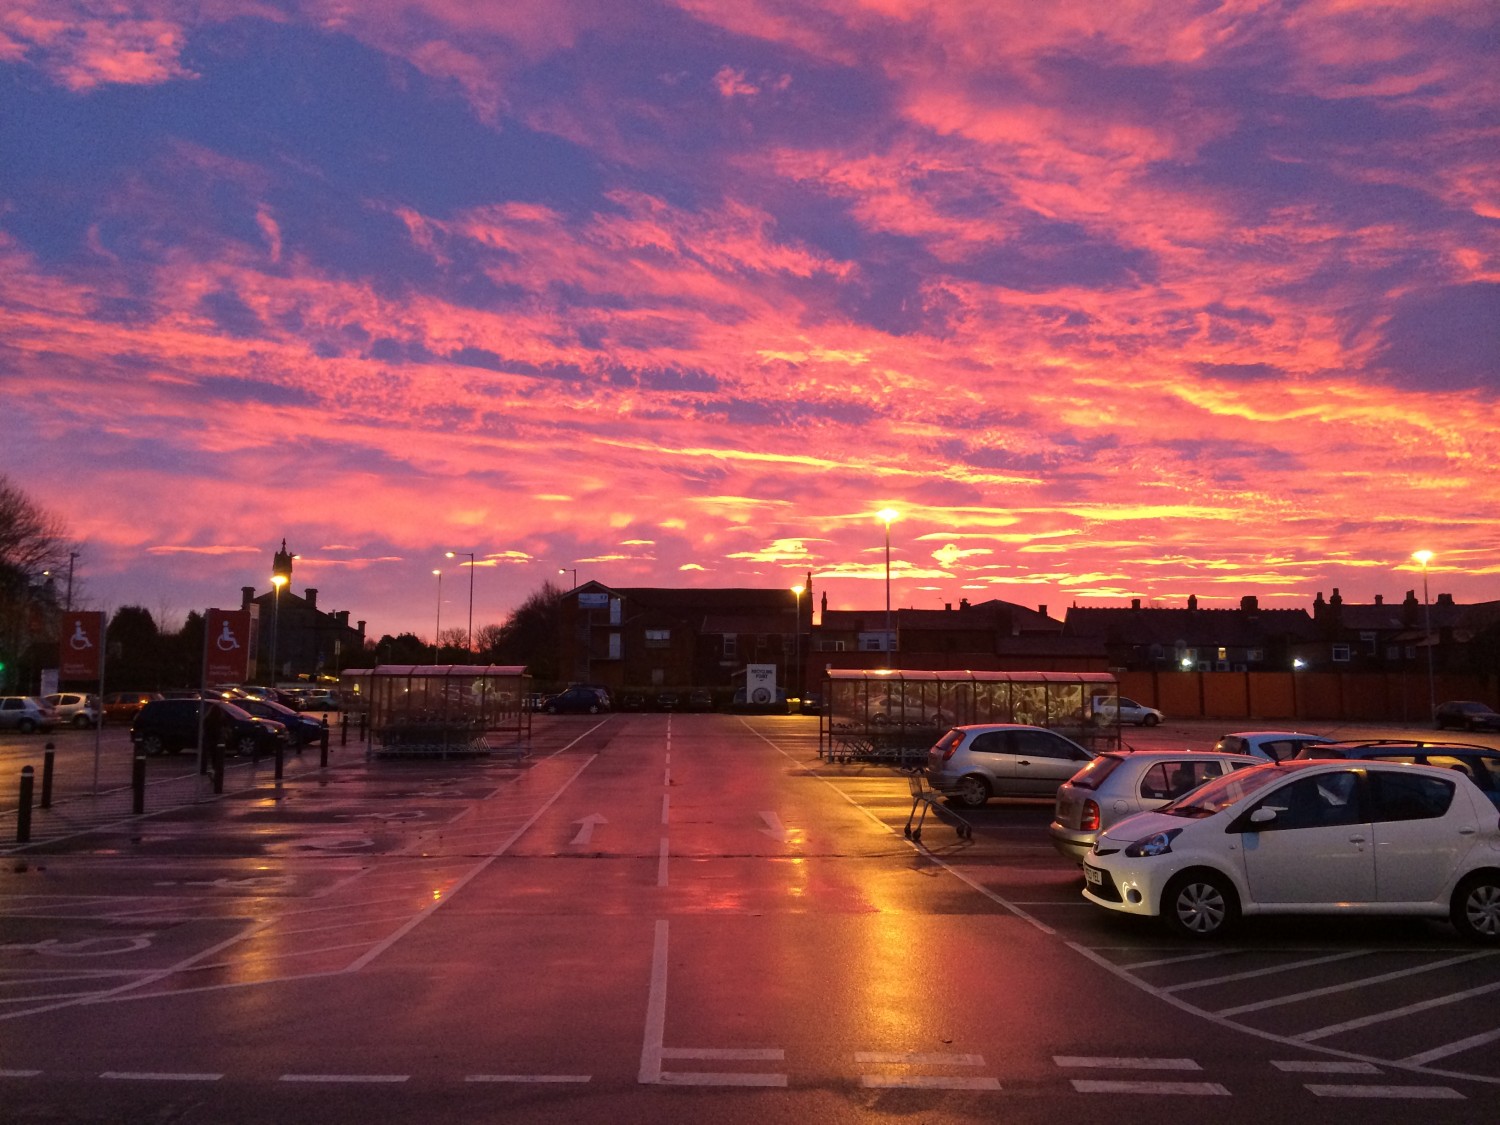 Awesome sunrise in Burscough